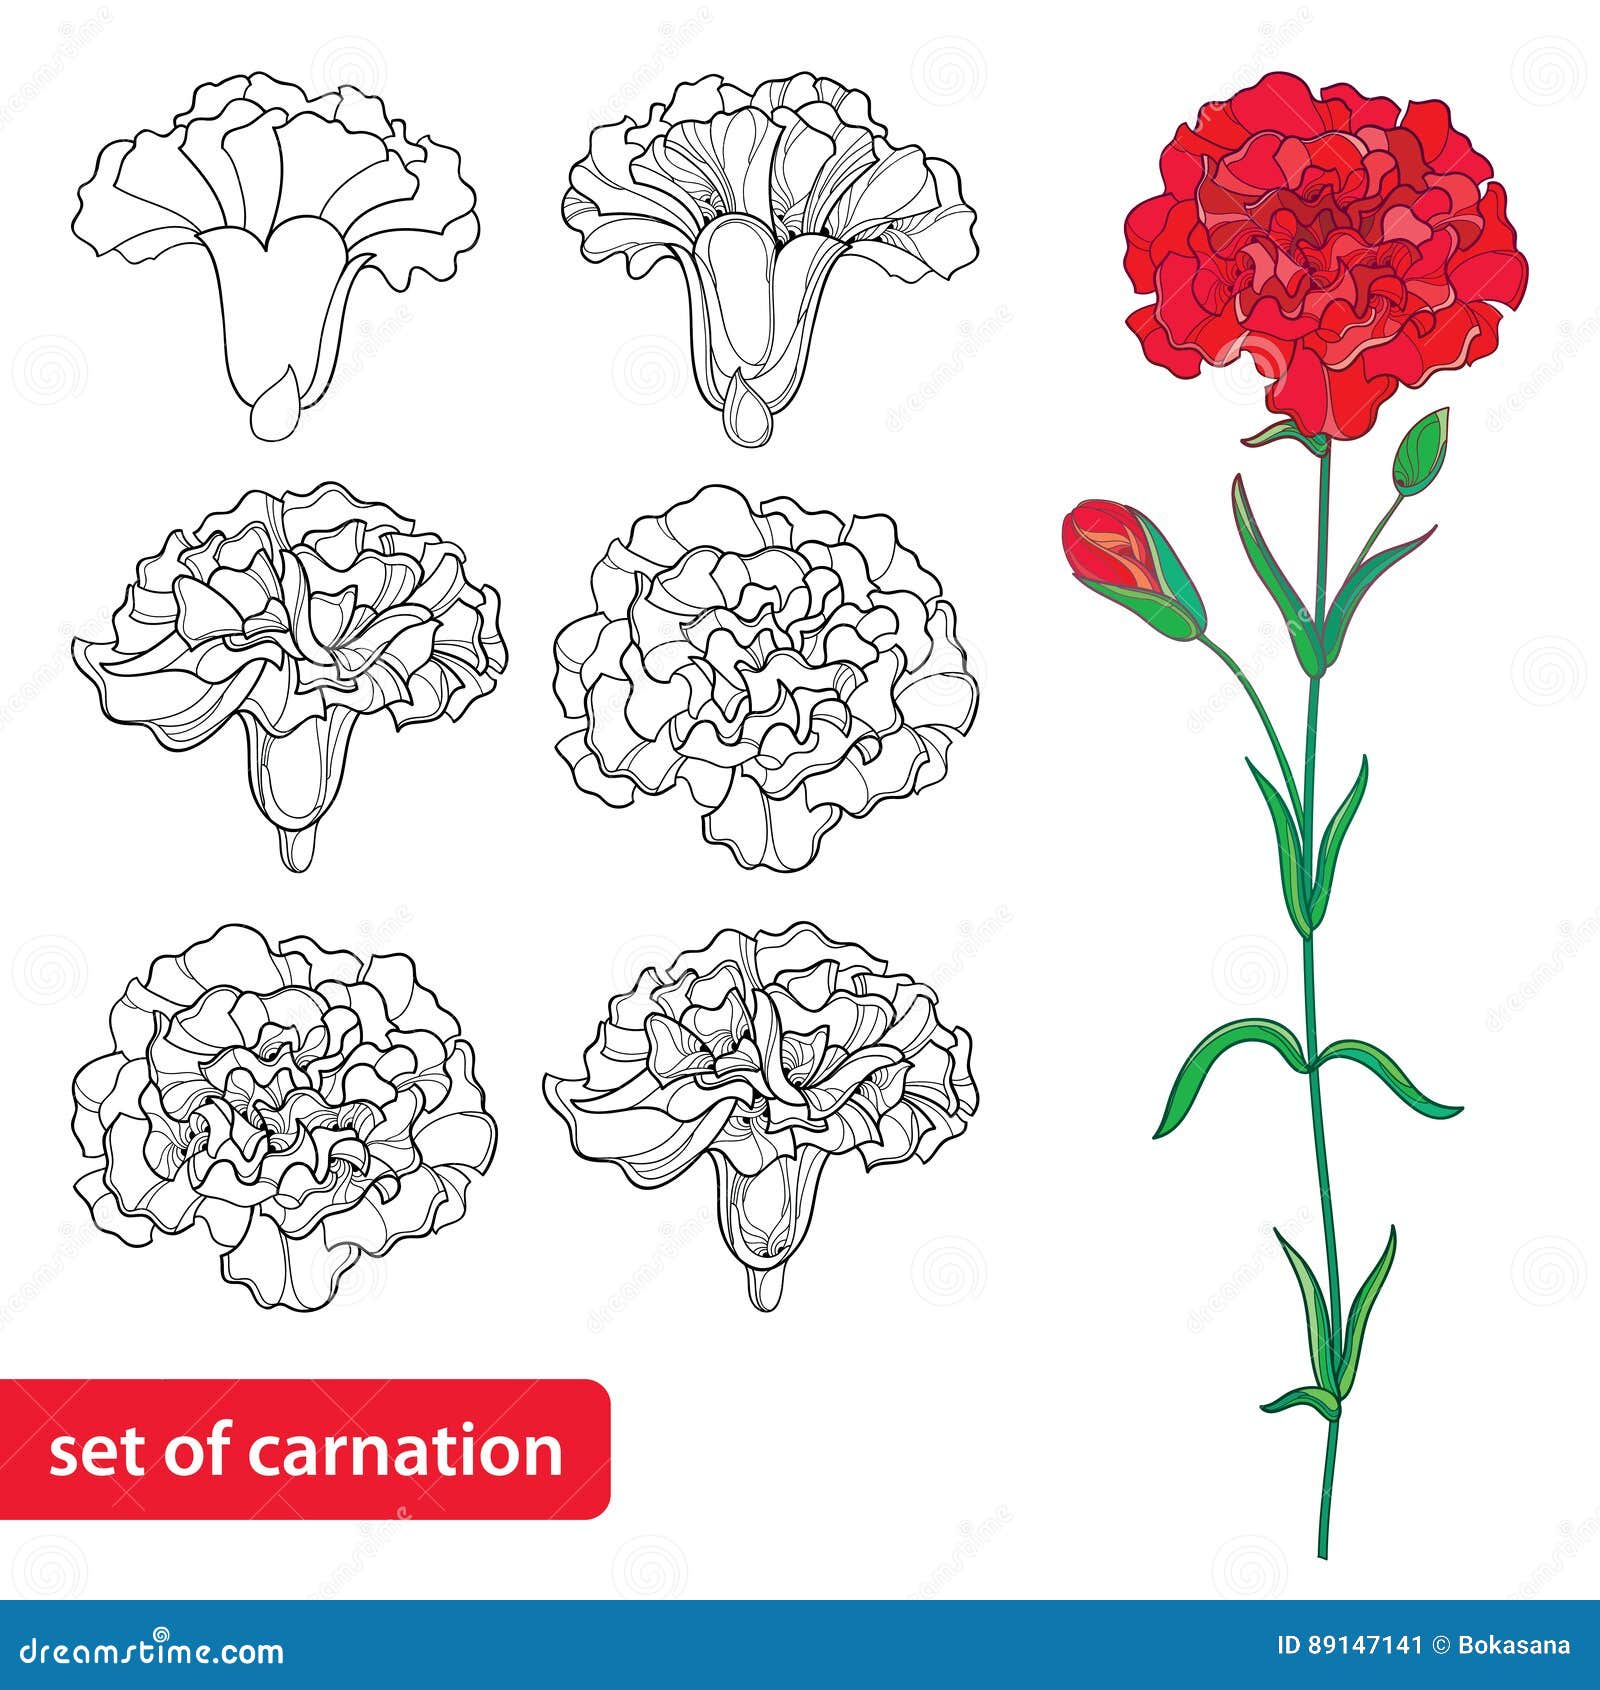 Carnation drawing on Pinterest